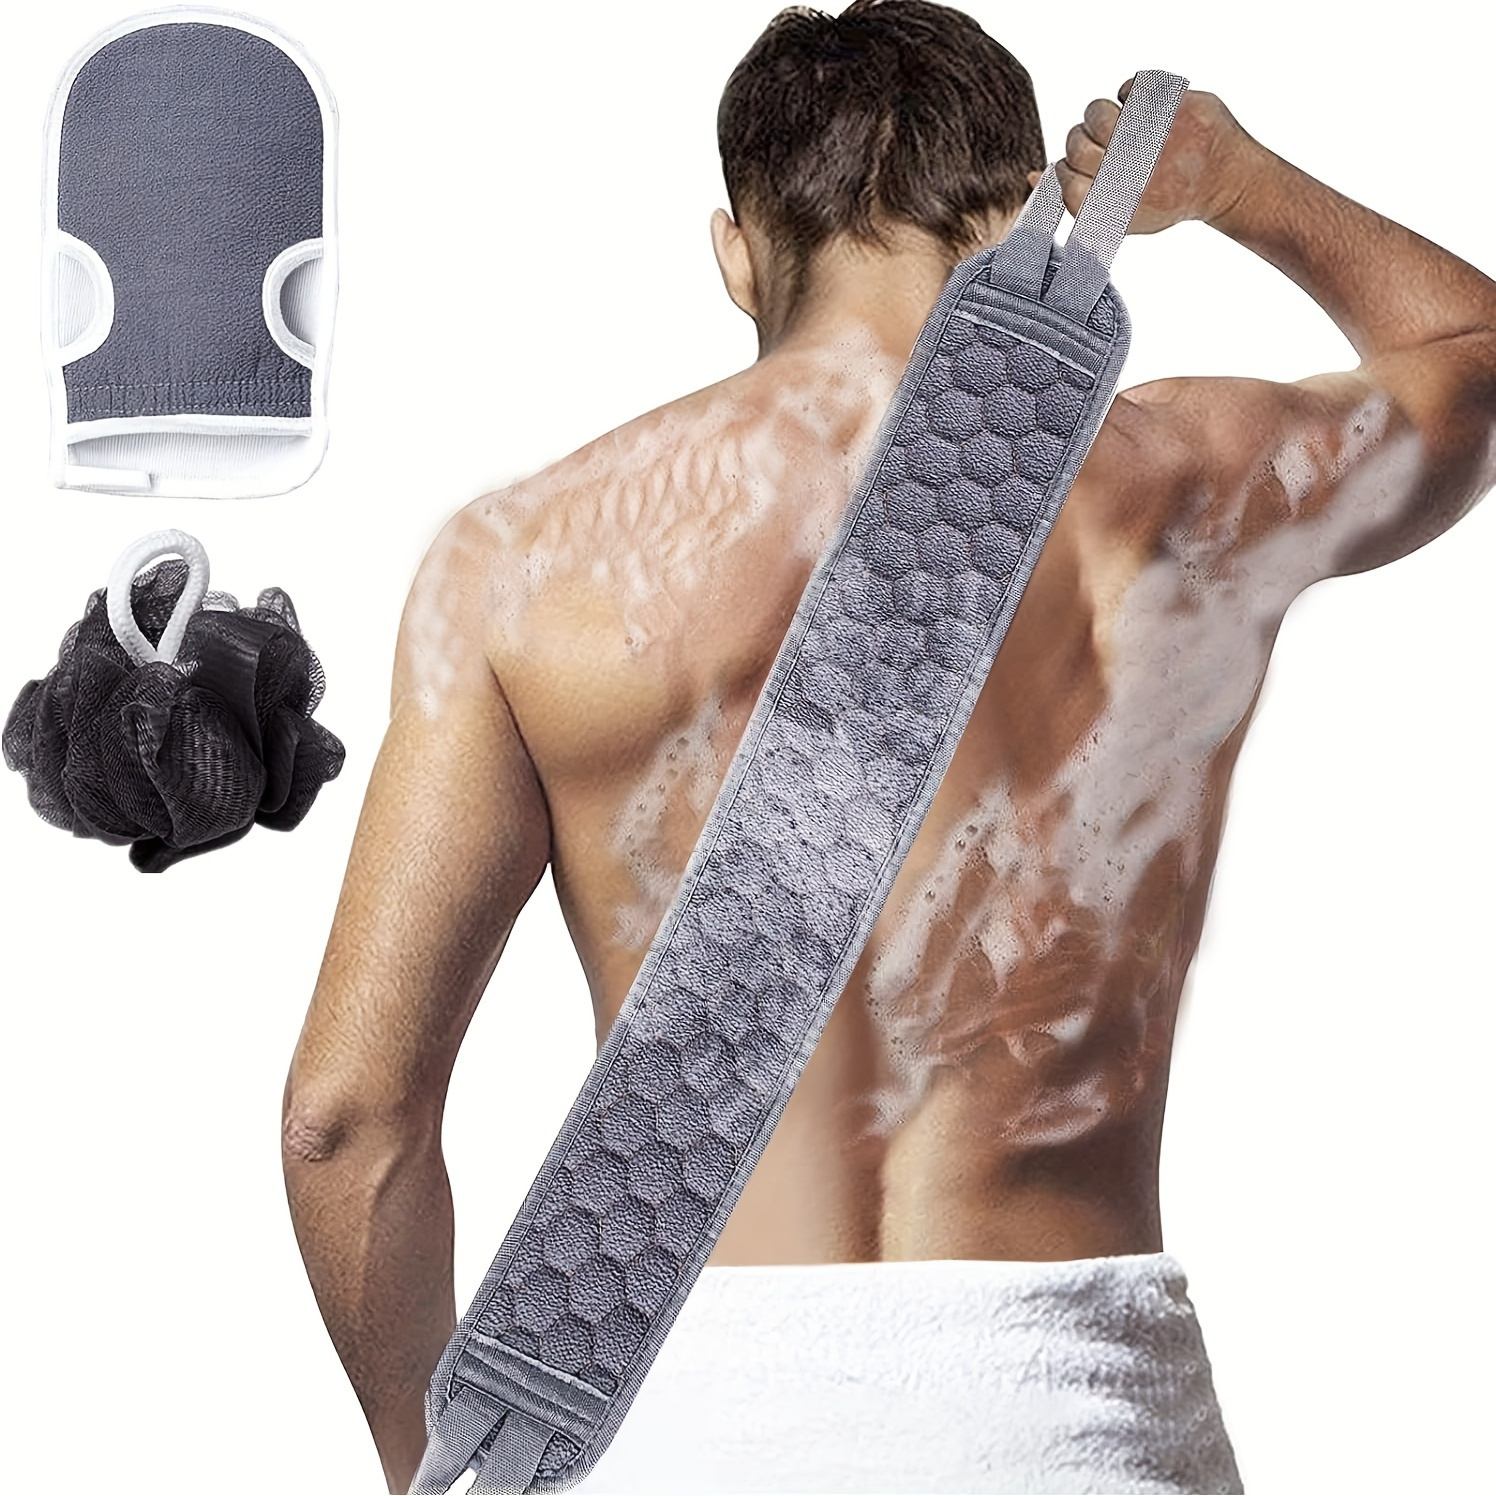 

3pcs/set Exfoliating Body Scrubber Set - Back Scrubber, Bath Glove, Shower Sponge Loofah - Deep Clean, Revitalize Skin